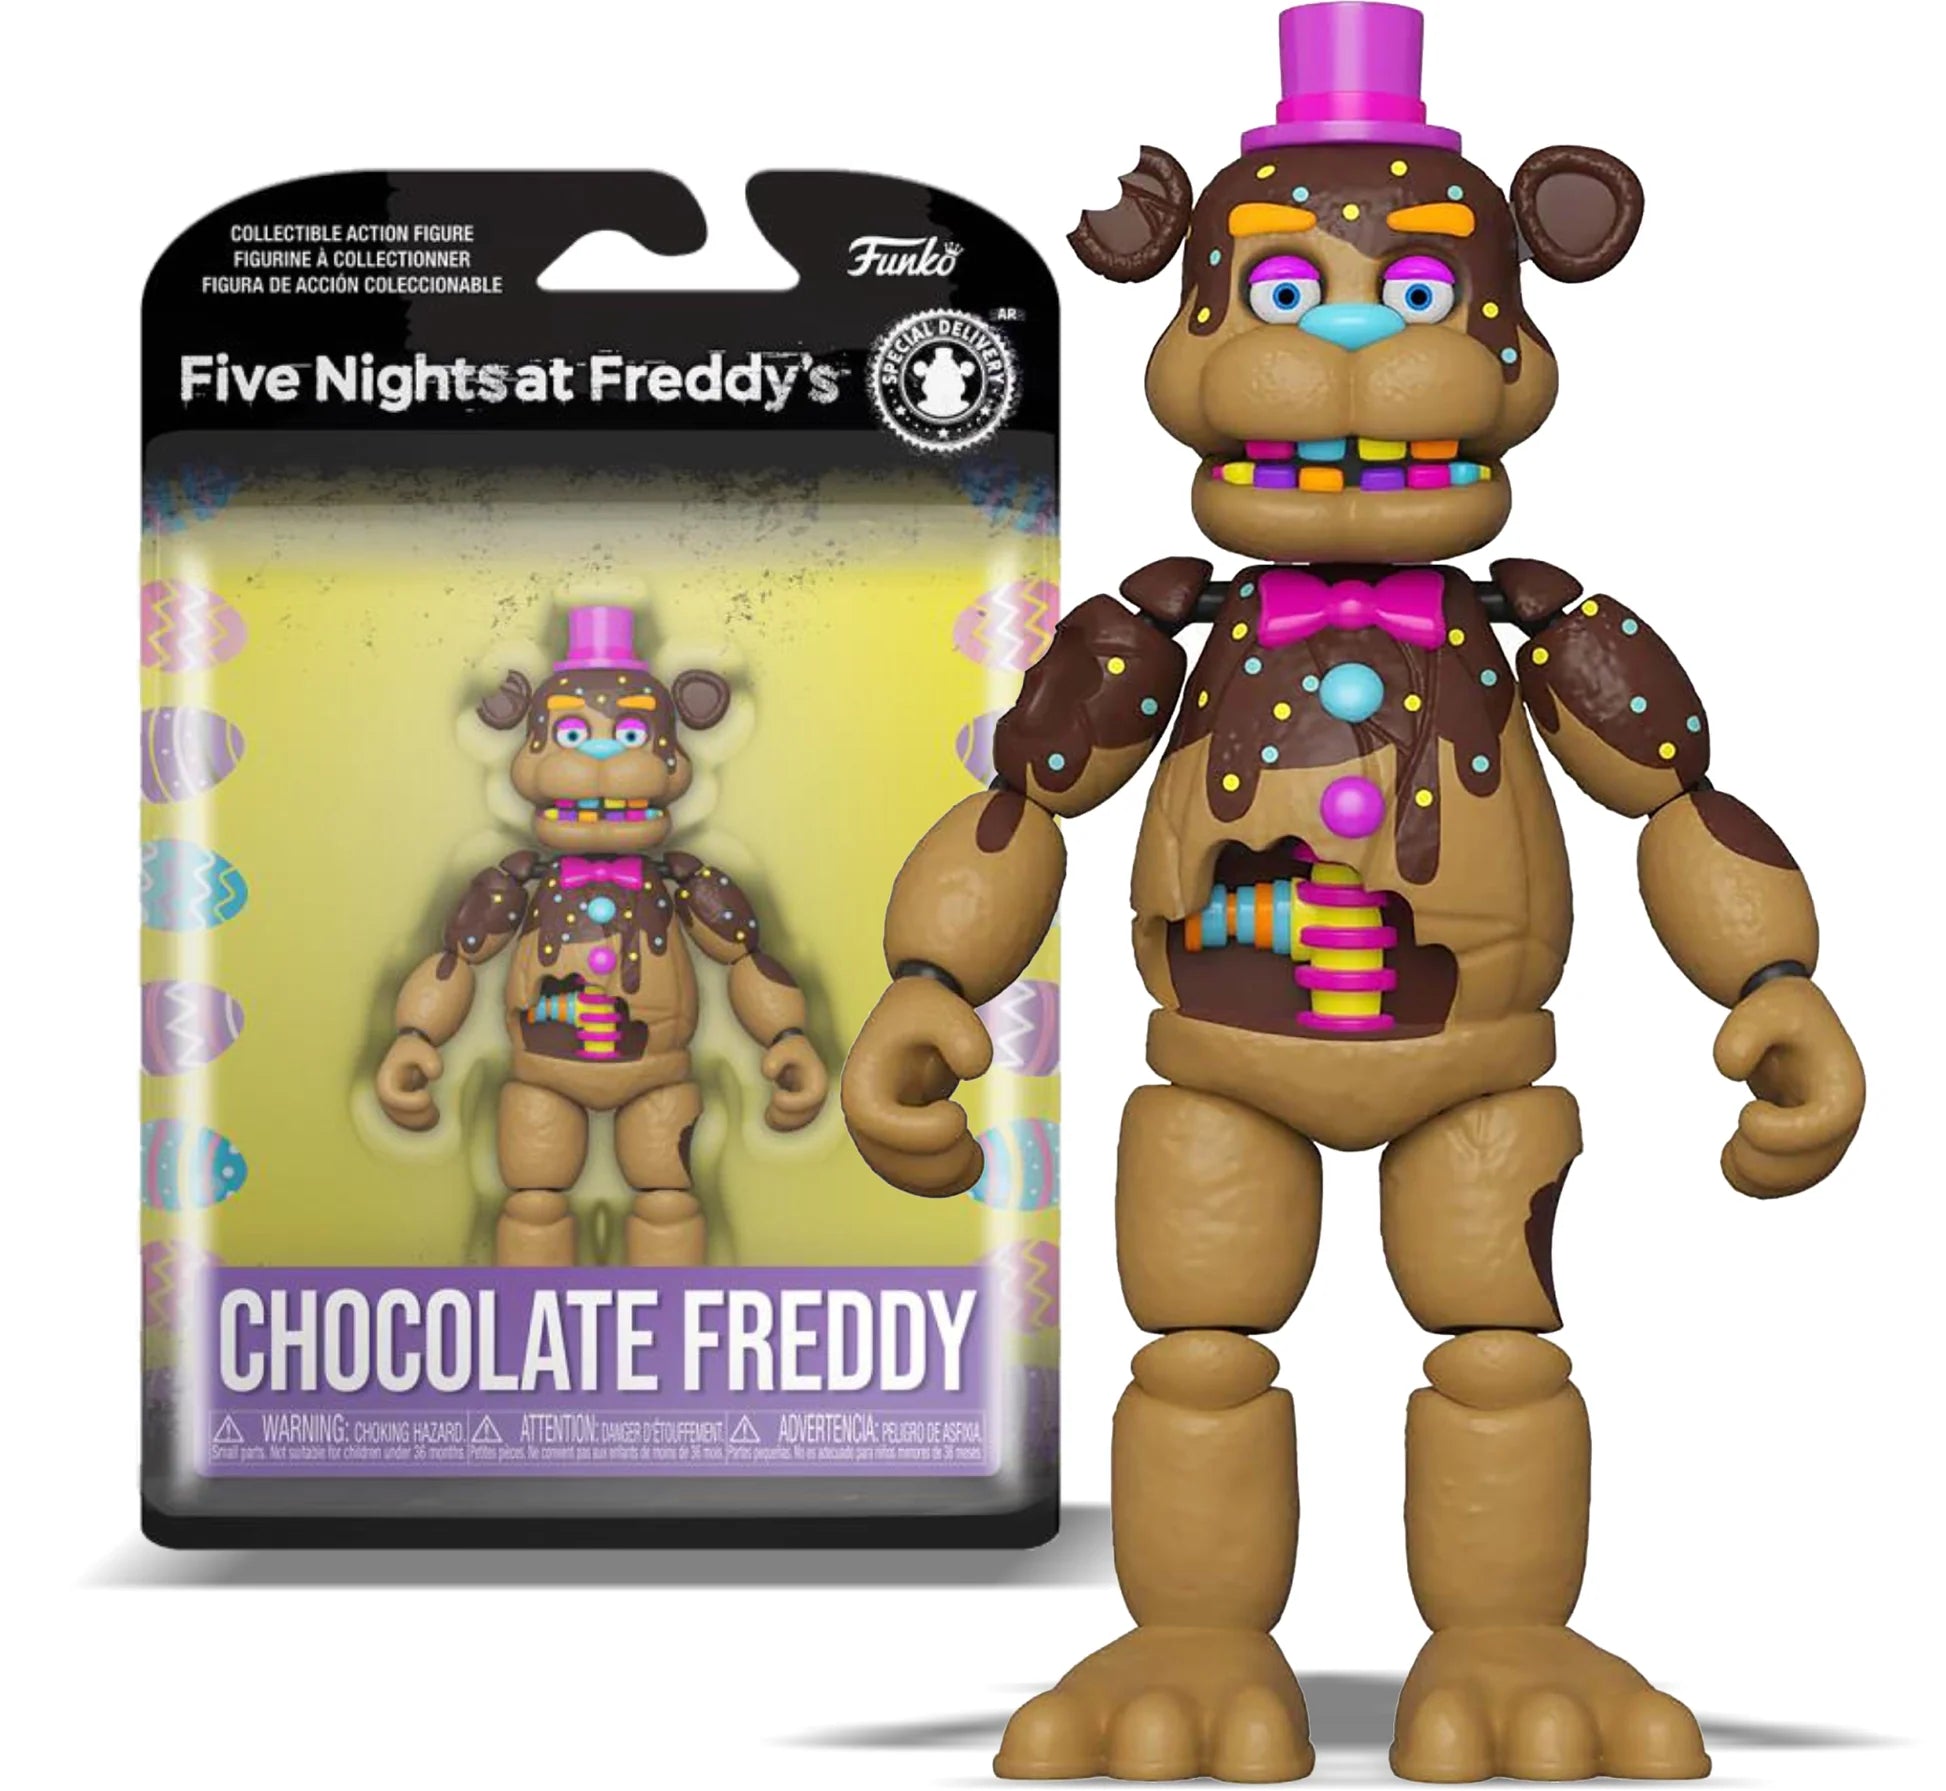 Five Nights at Freddy's: Chocolate Freddy 5" Funko Figure